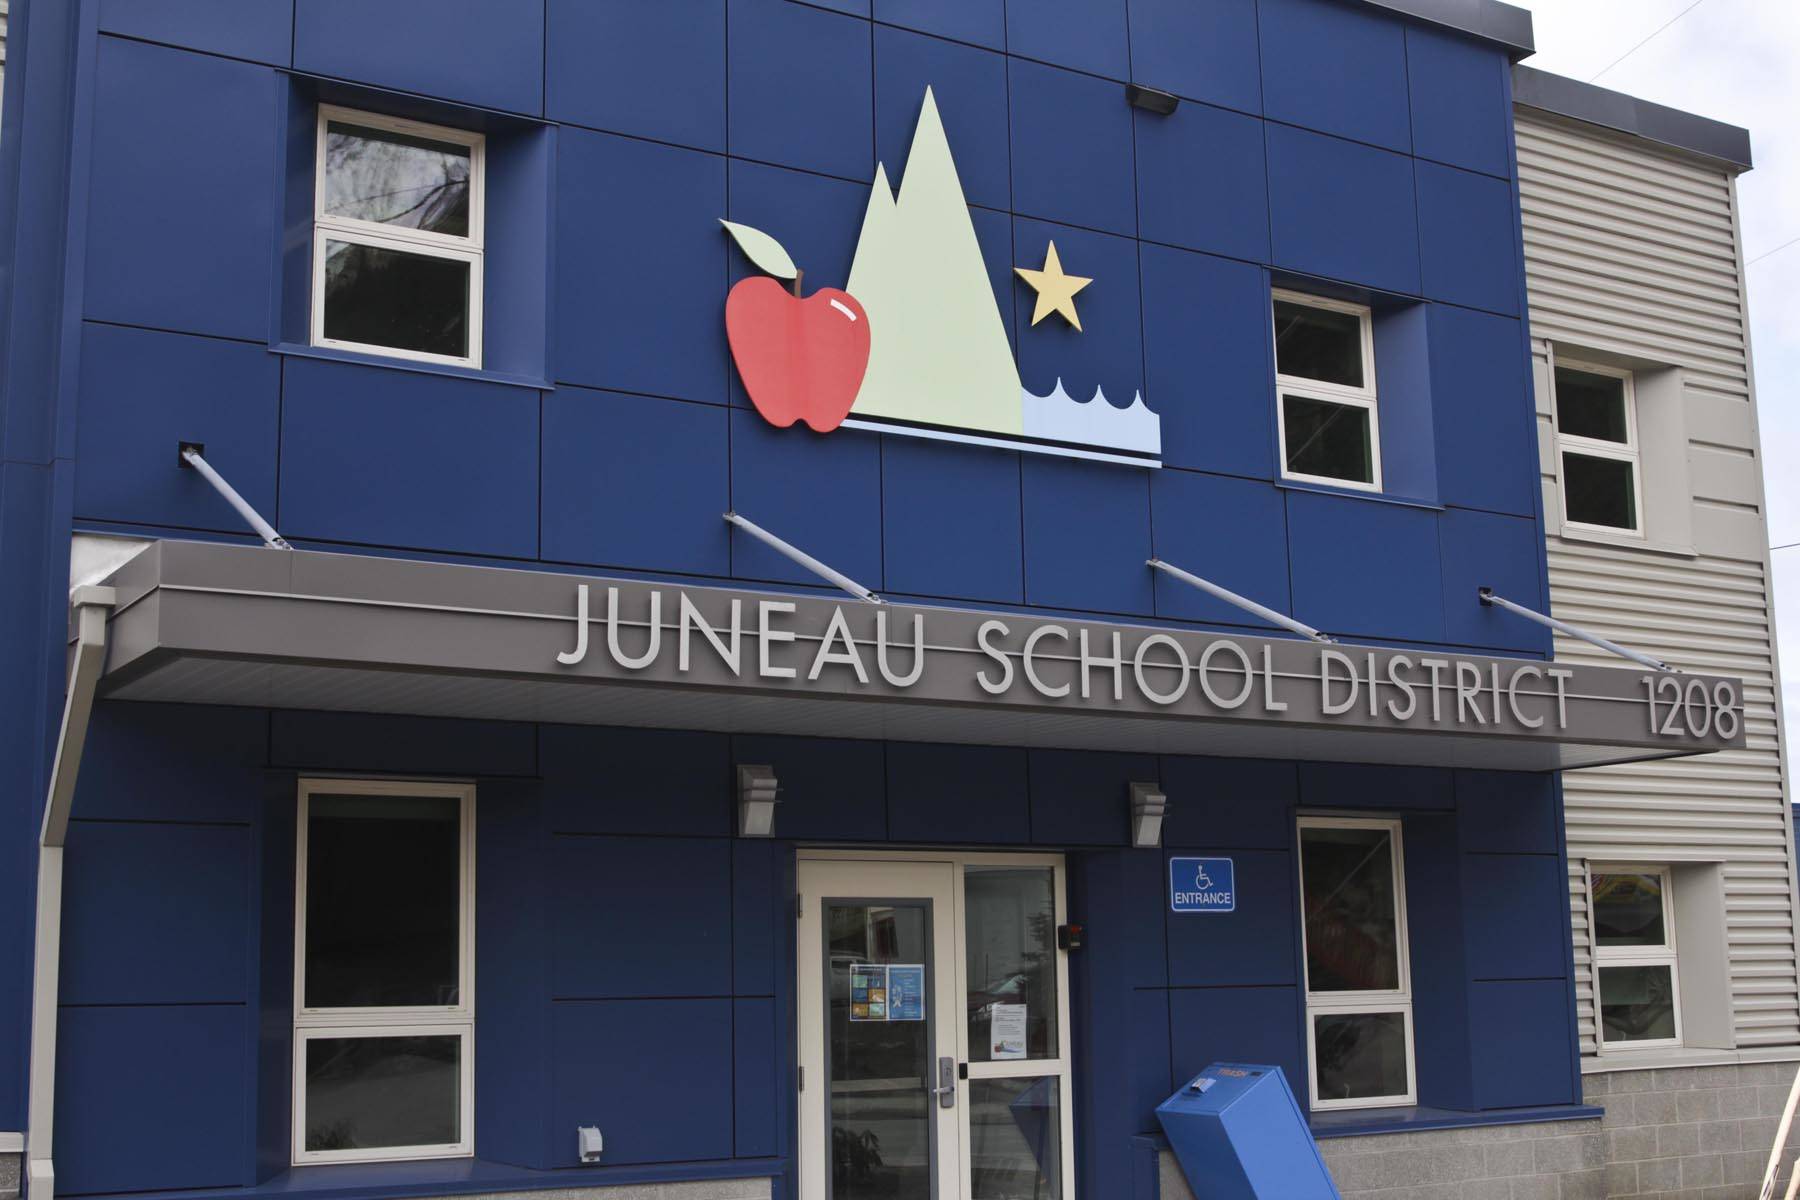 The Juneau School District building, March 20, 2020. (Michael S. Lockett/ Juneau Empire File)